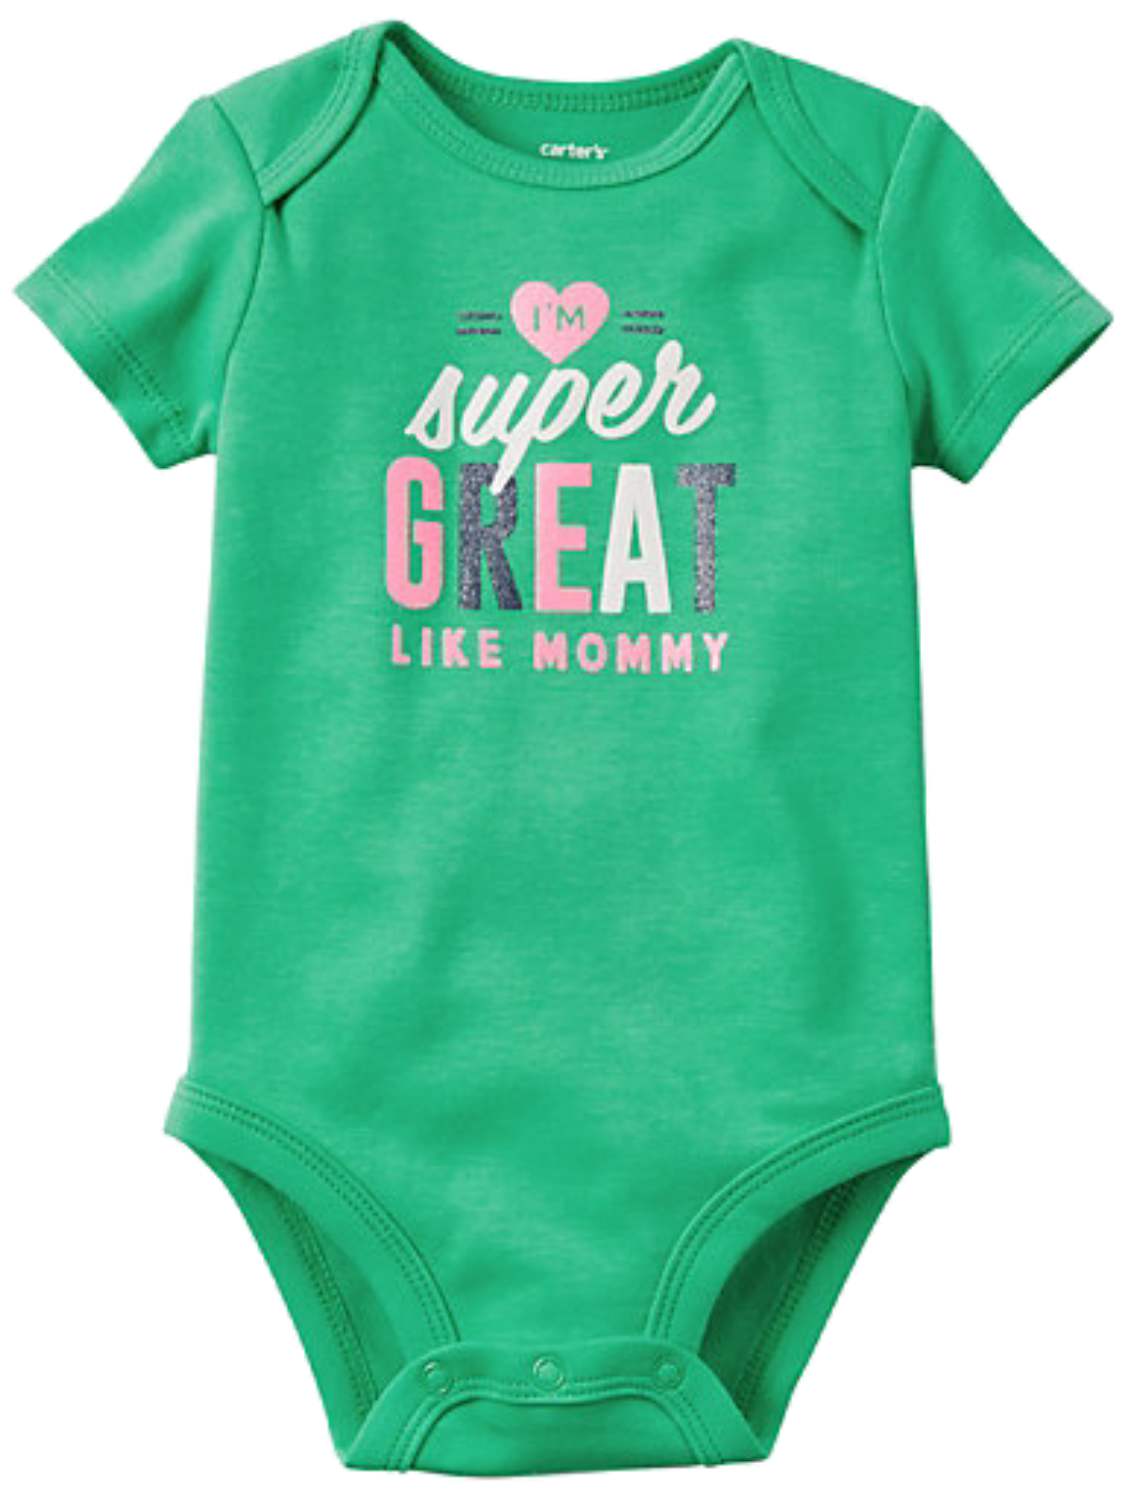 Carter's Carters Infant Girls Green I'm Super Great Like Mommy Bodysuit Creeper Shirt